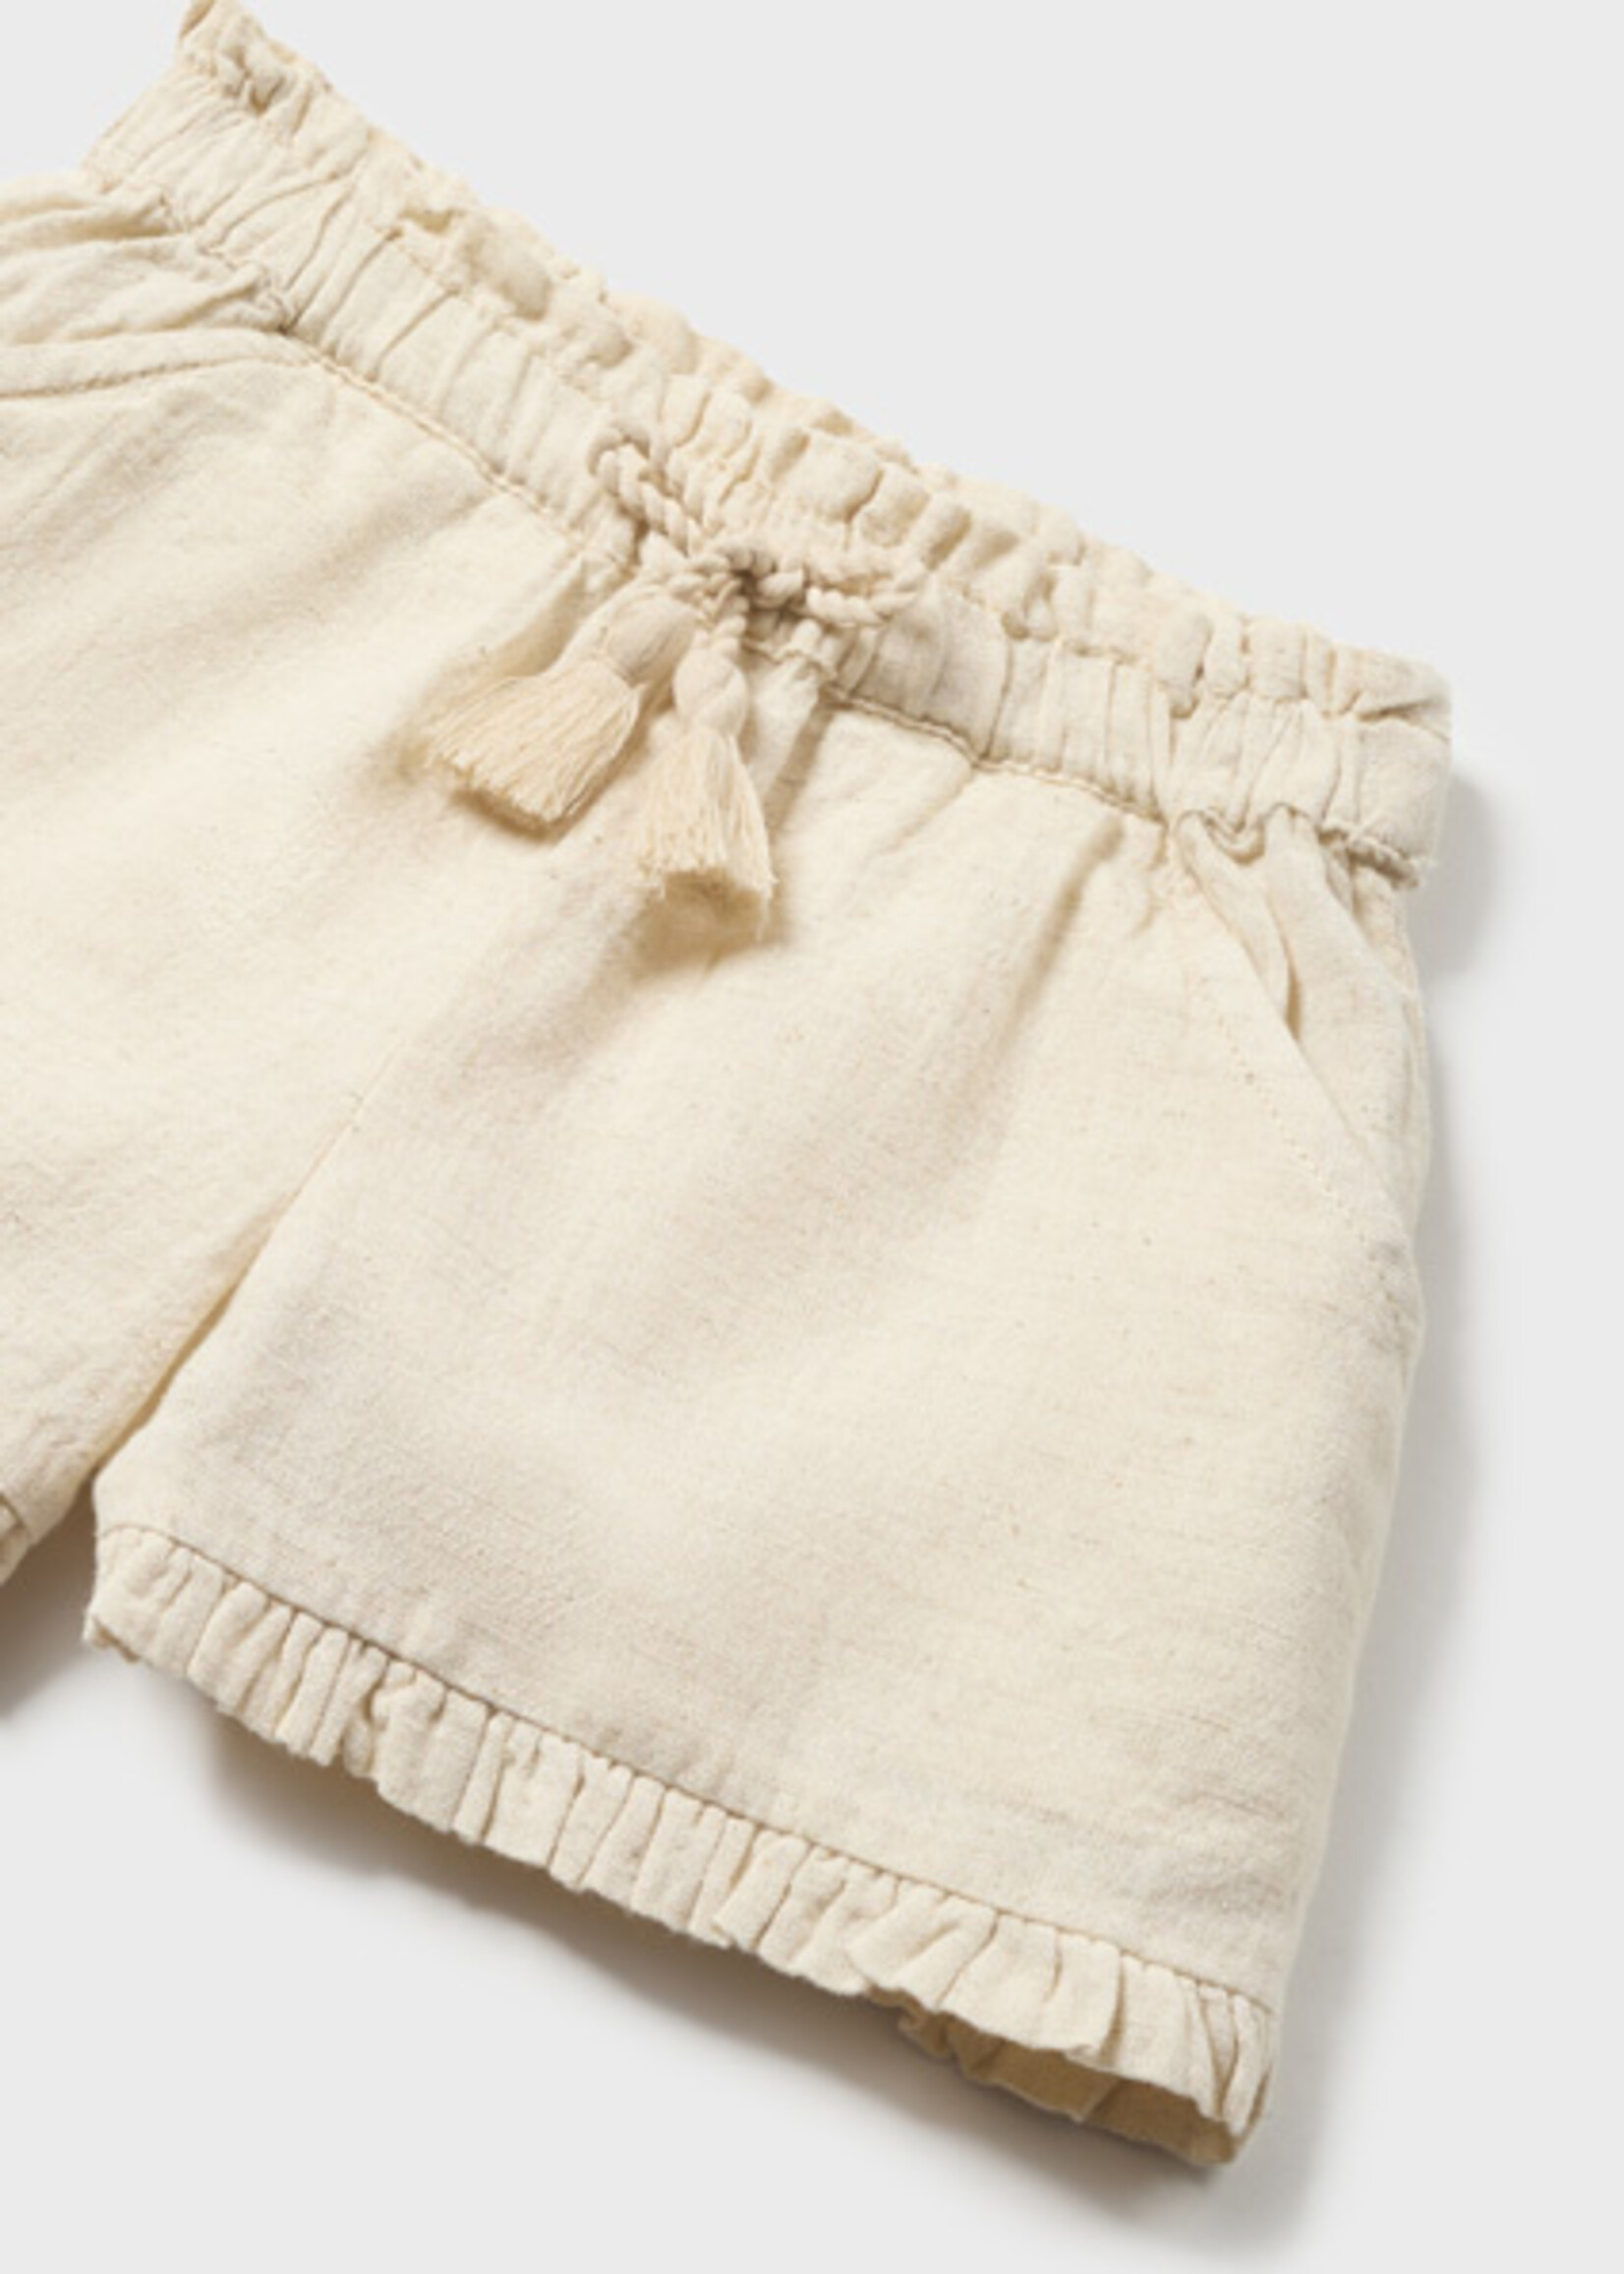 Mayoral linen shorts